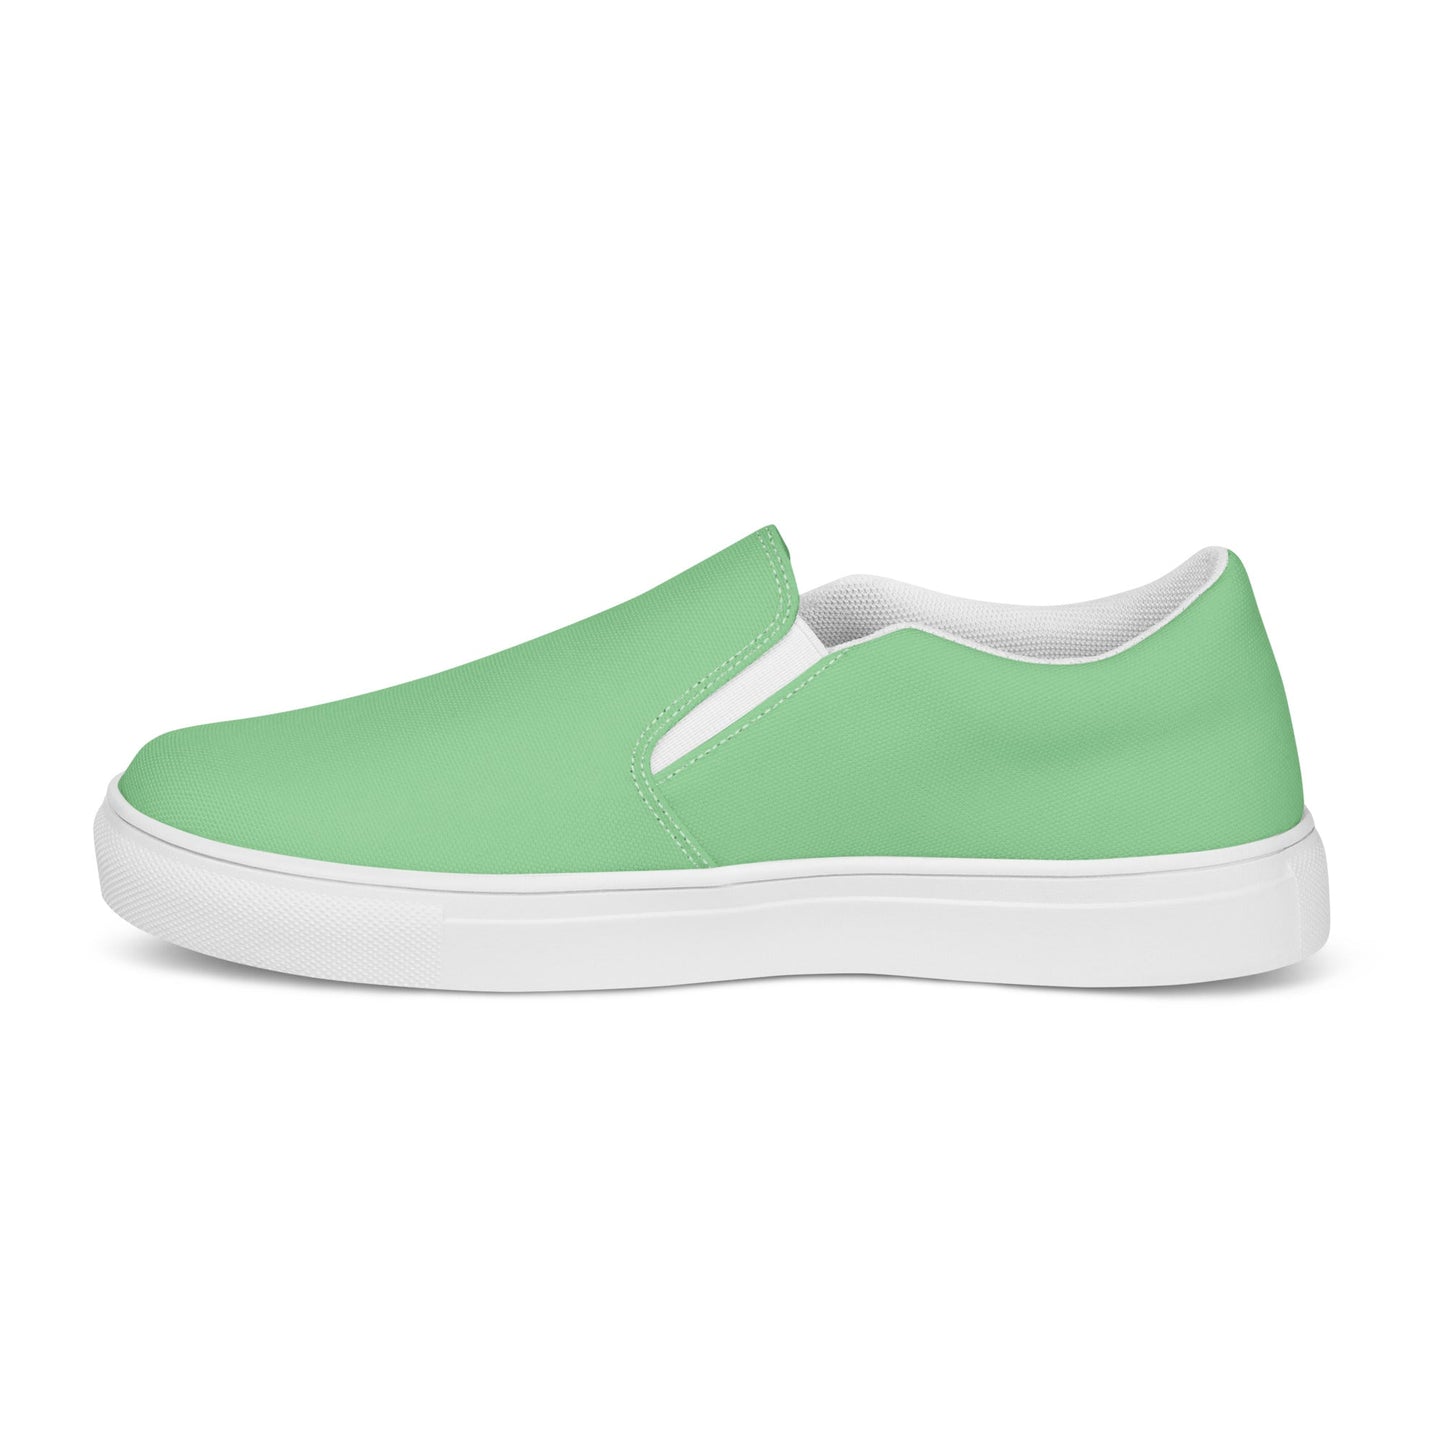 klasneakers Women’s slip-on canvas shoes - Mint